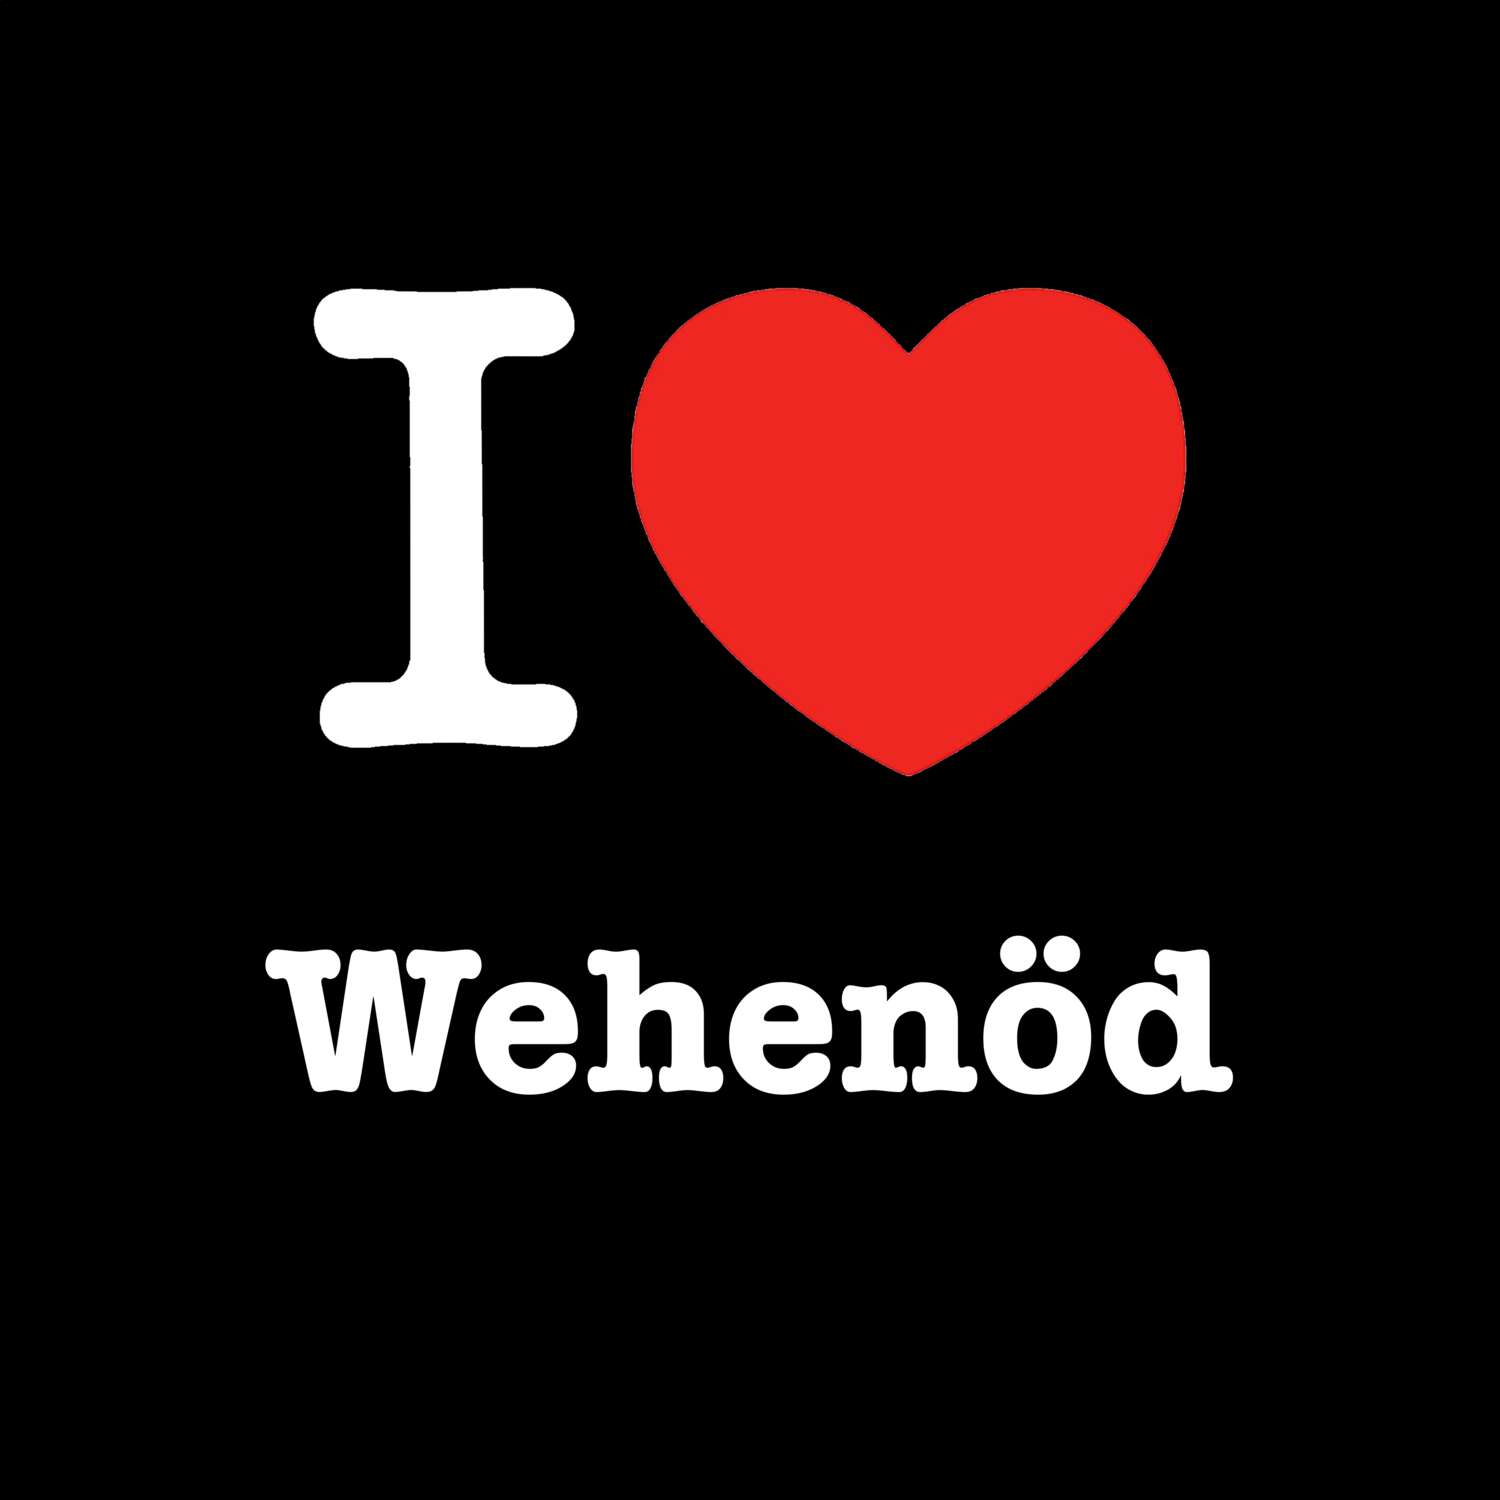 Wehenöd T-Shirt »I love«